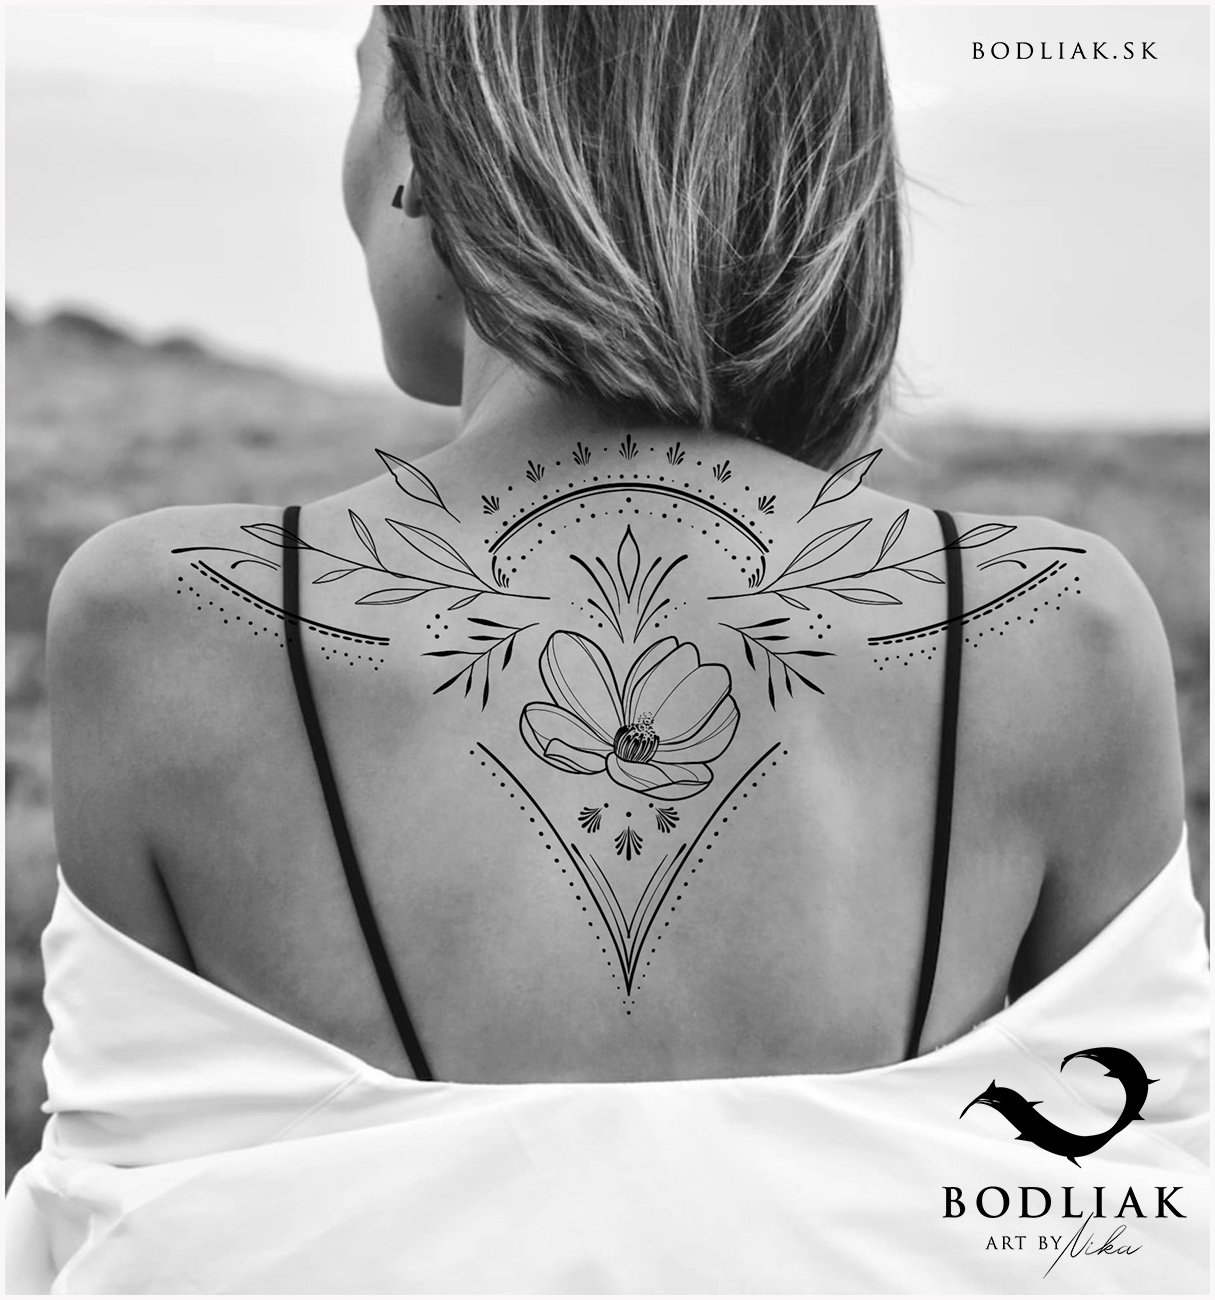  bodliak-bodliaktattoo-motiv-design-original-nika-tetovanie-tattoo-line-linetattoo-blacktattoo-flower-kvet-mandala-ornamentiky 